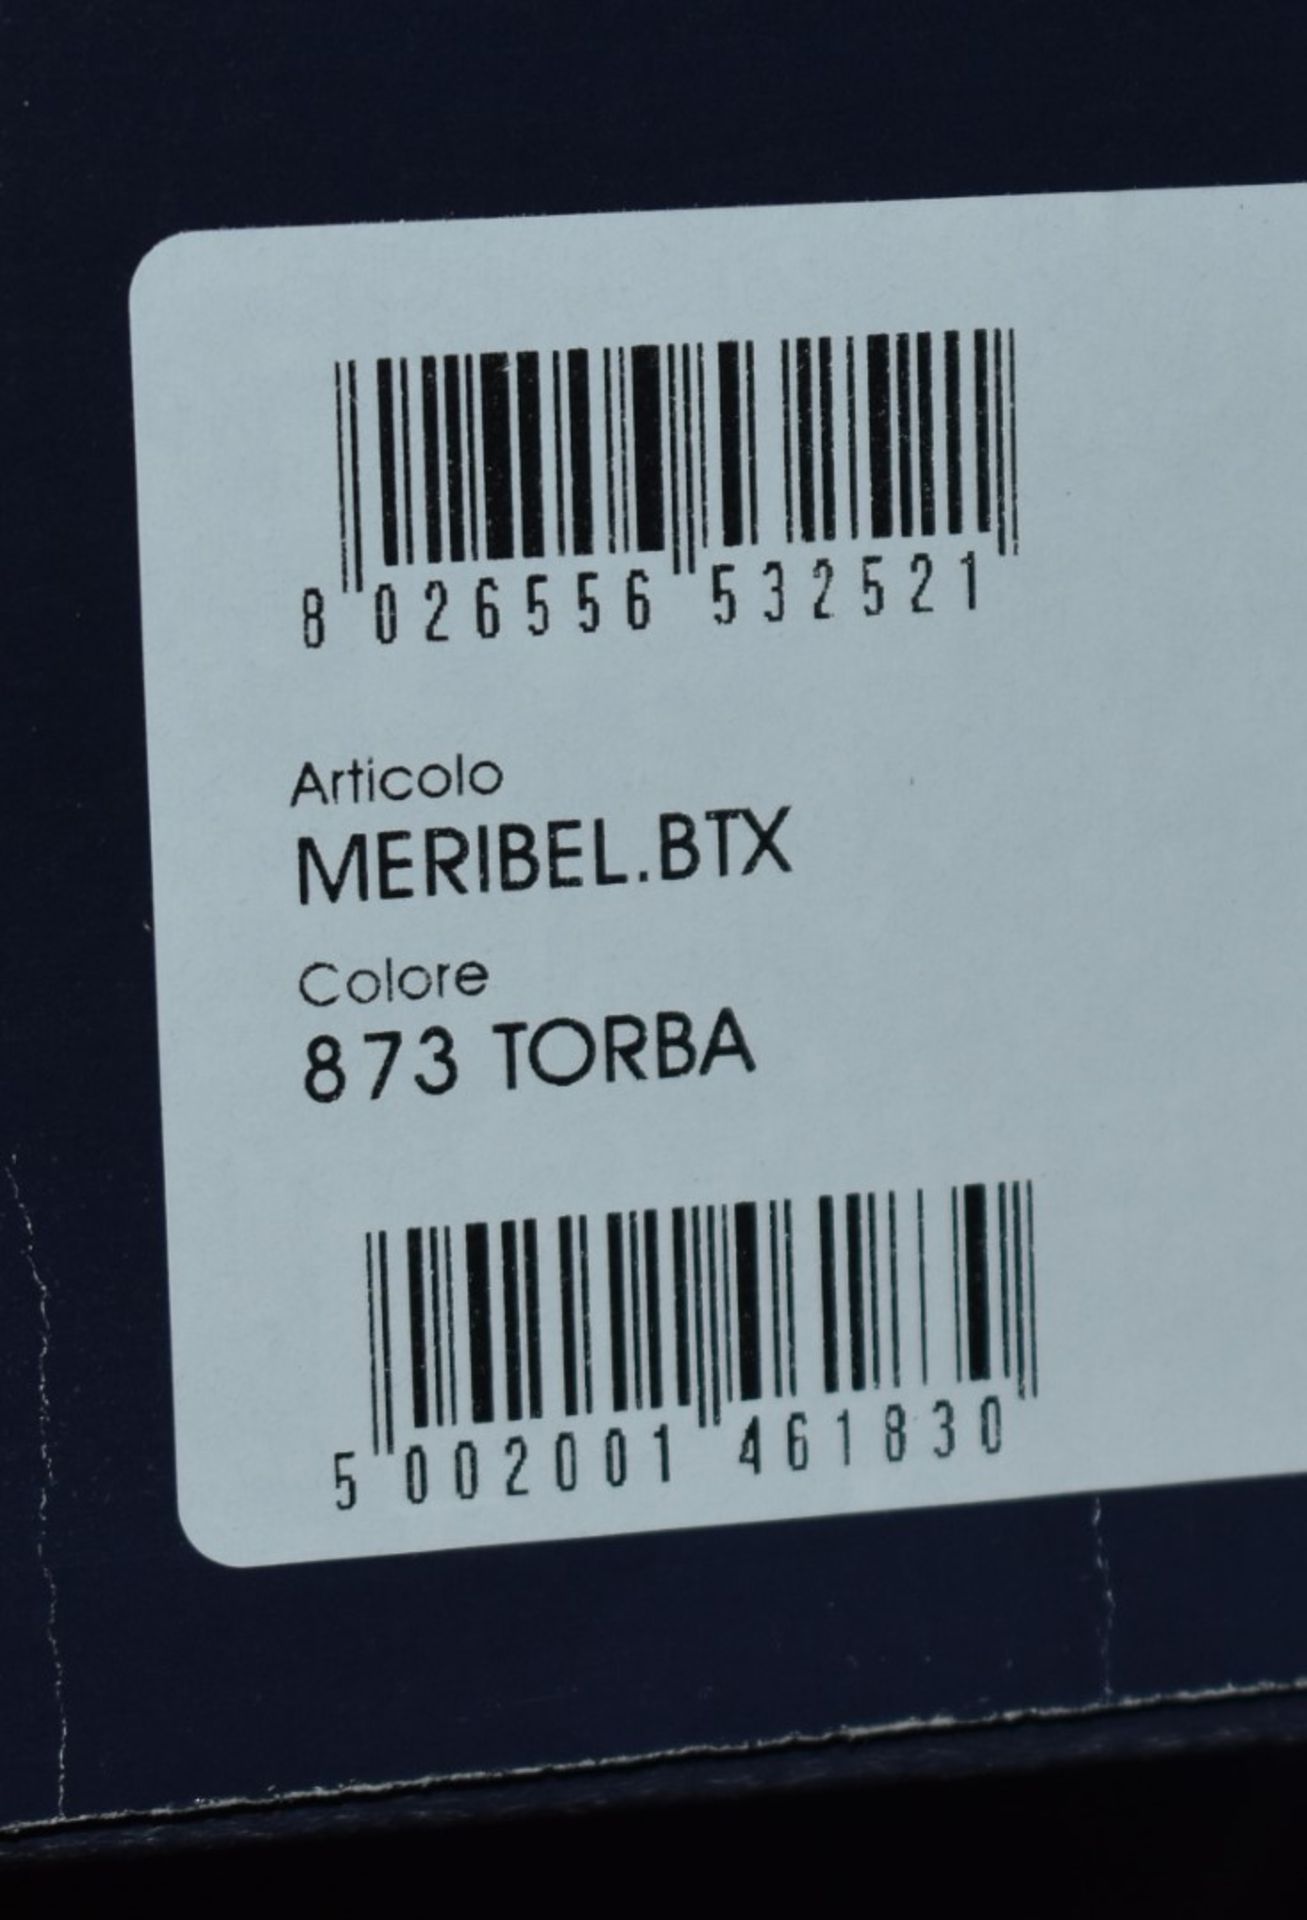 1 x Pair of Designer Olang Meribel 873 Torba Women's Winter Boots - Euro Size 36 - Brand New Boxed - Image 2 of 5